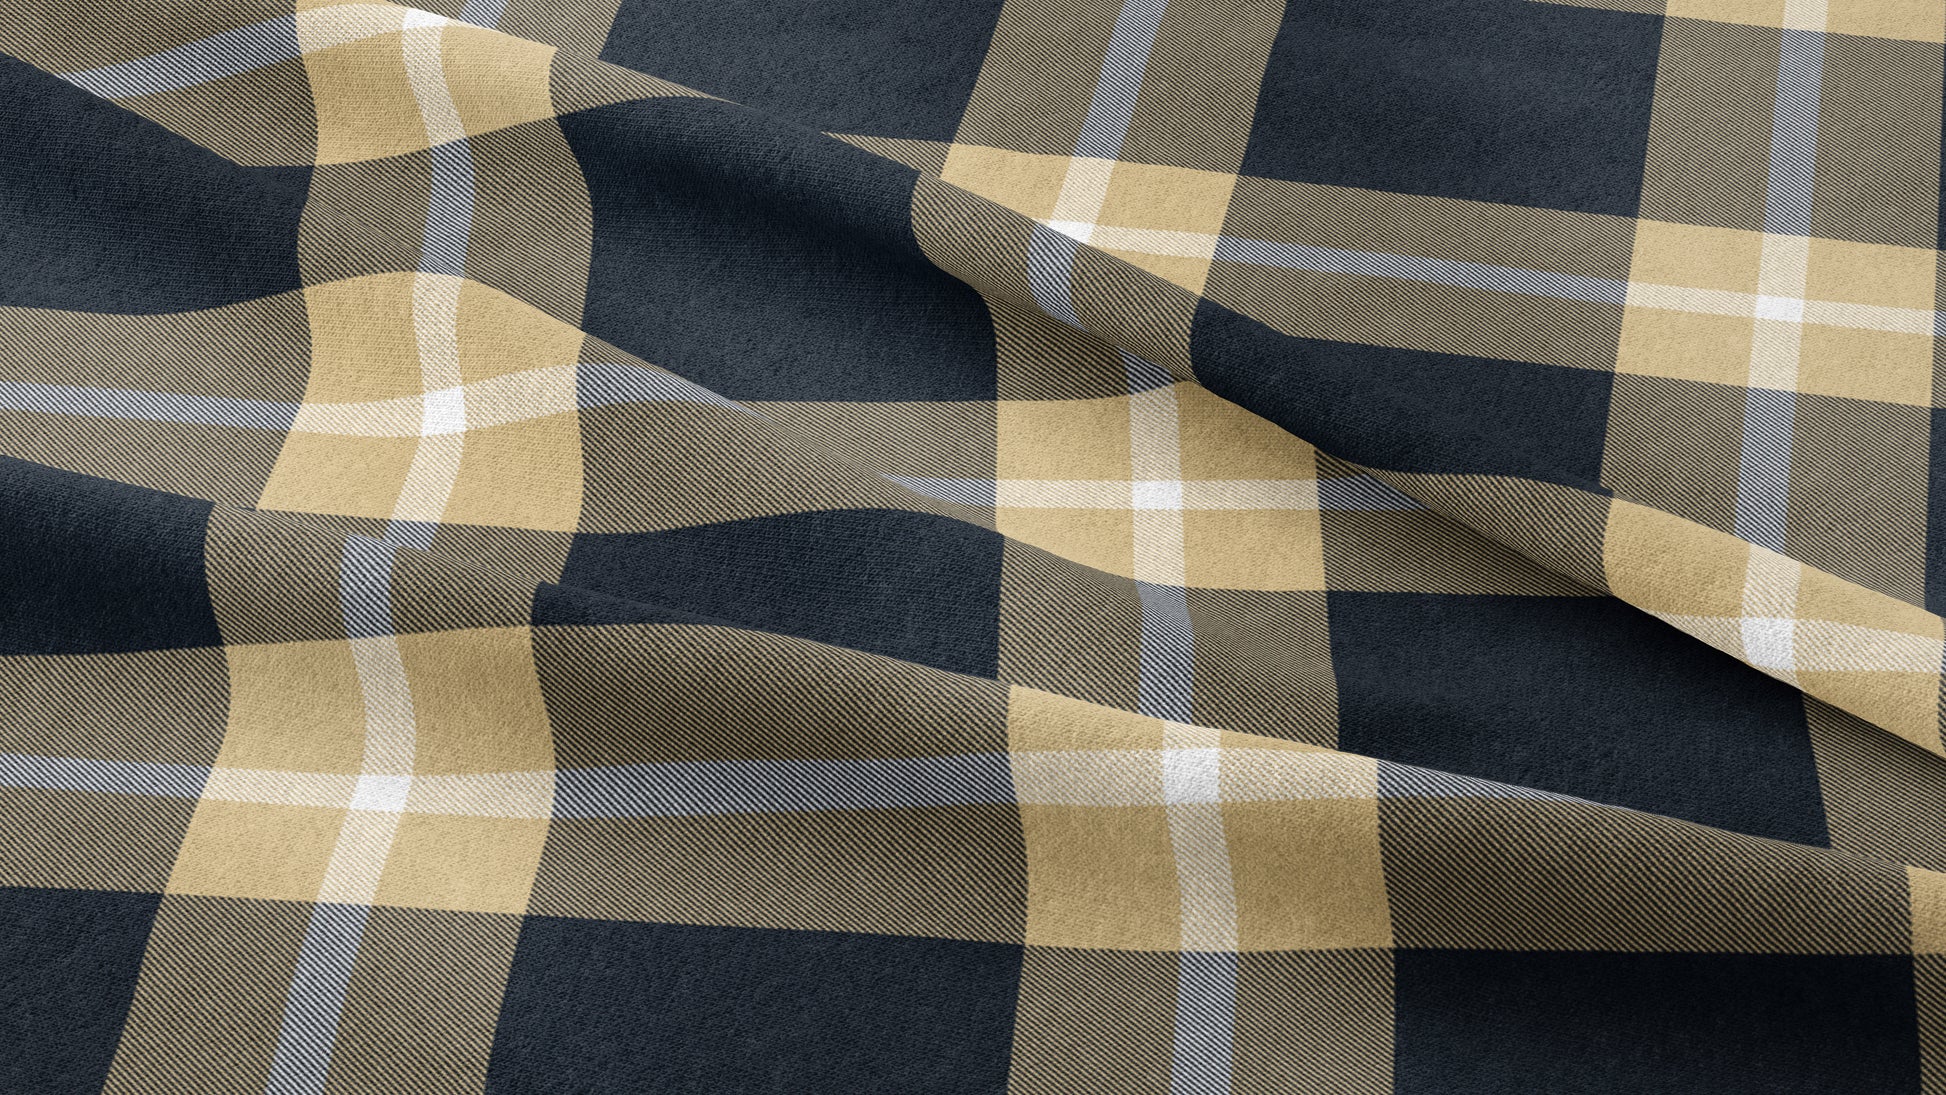 Team Plaid New Orleans Saints Football Printed Fabric by Studio Ten Design